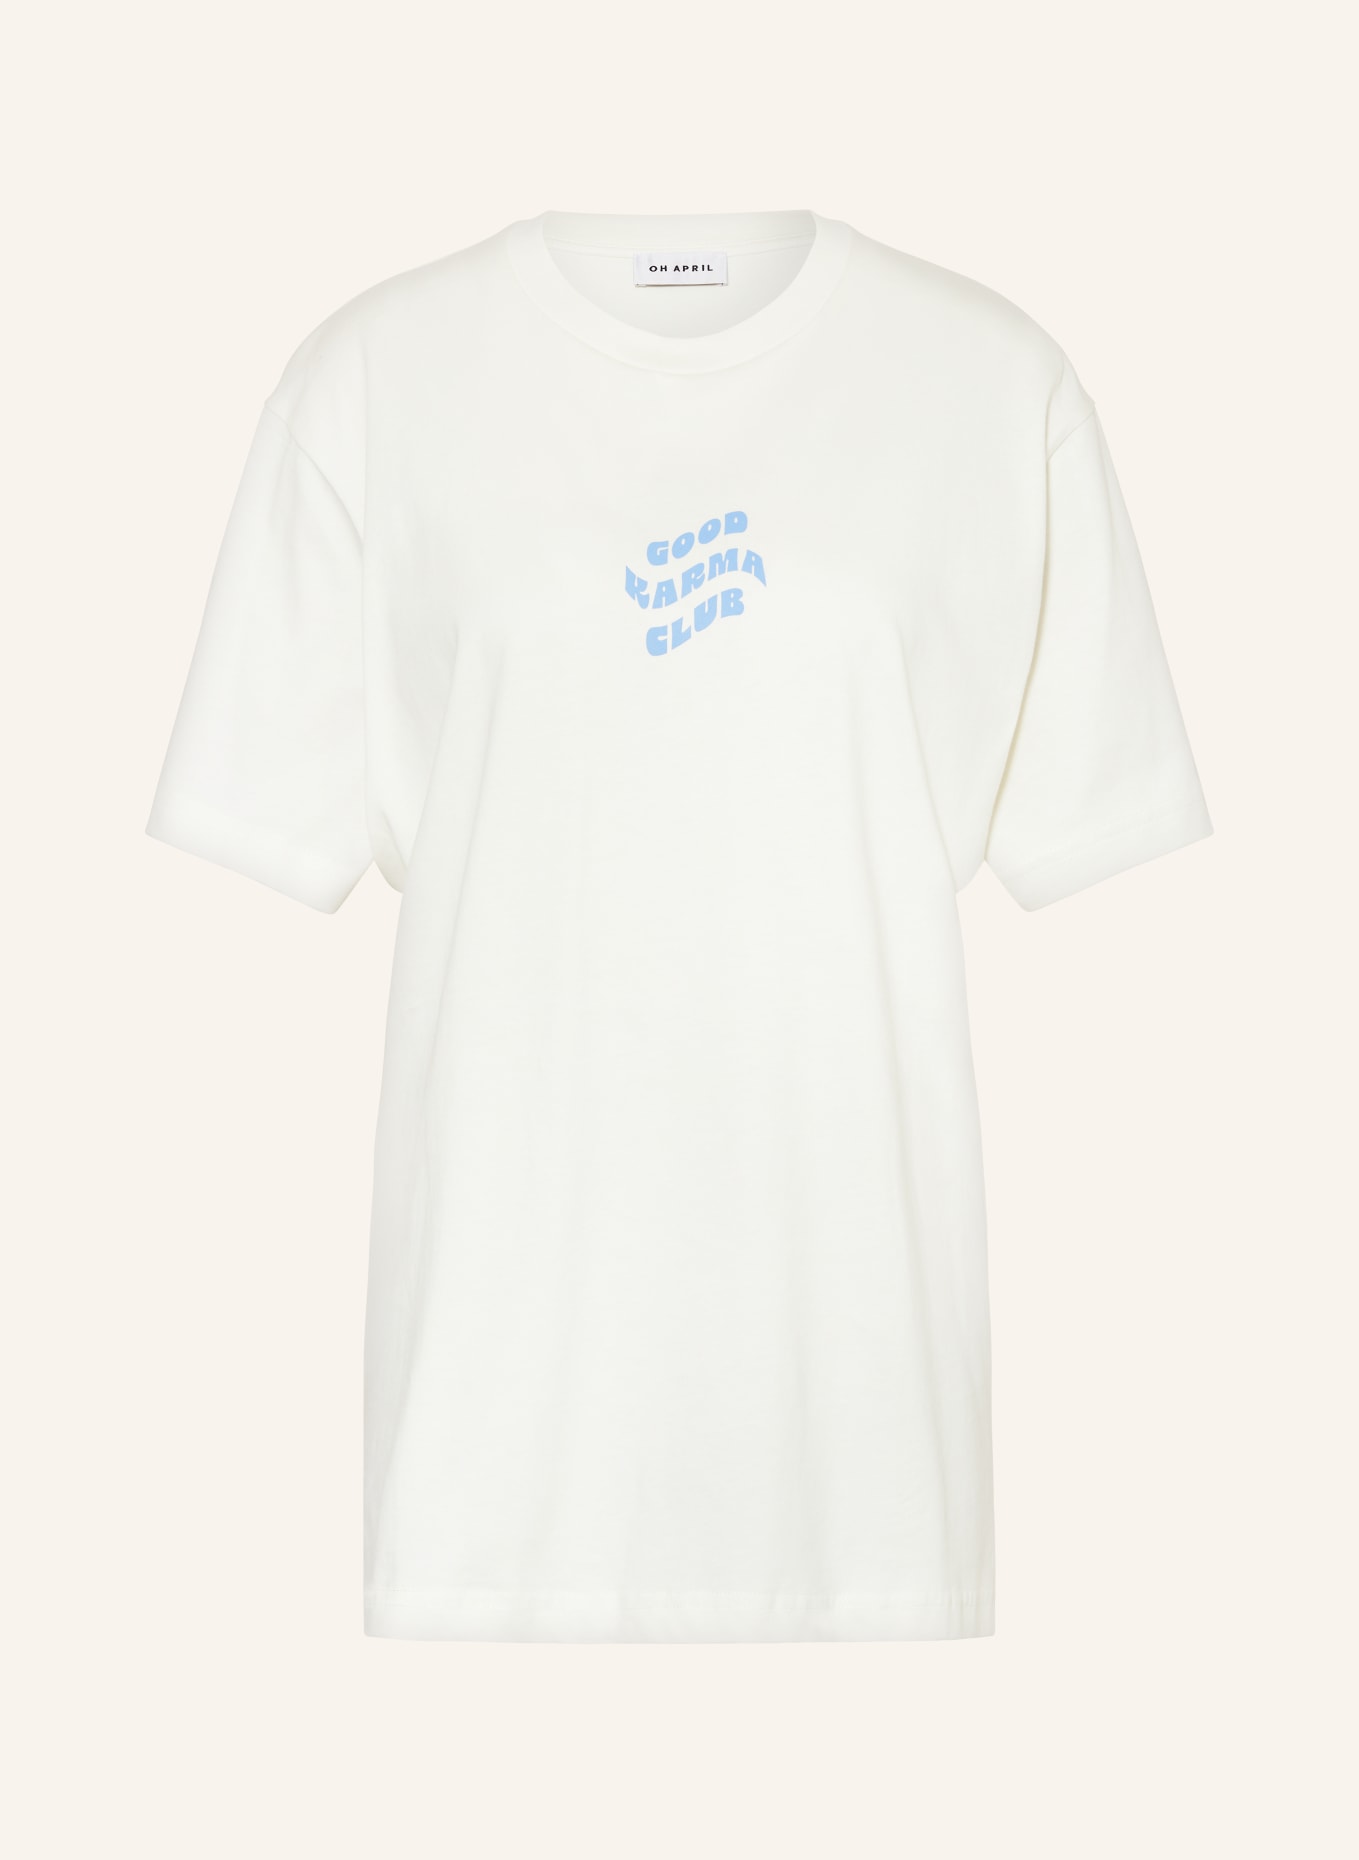 OH APRIL T-shirt GOOD KARMA CLUB, Color: WHITE/ LIGHT BLUE (Image 1)